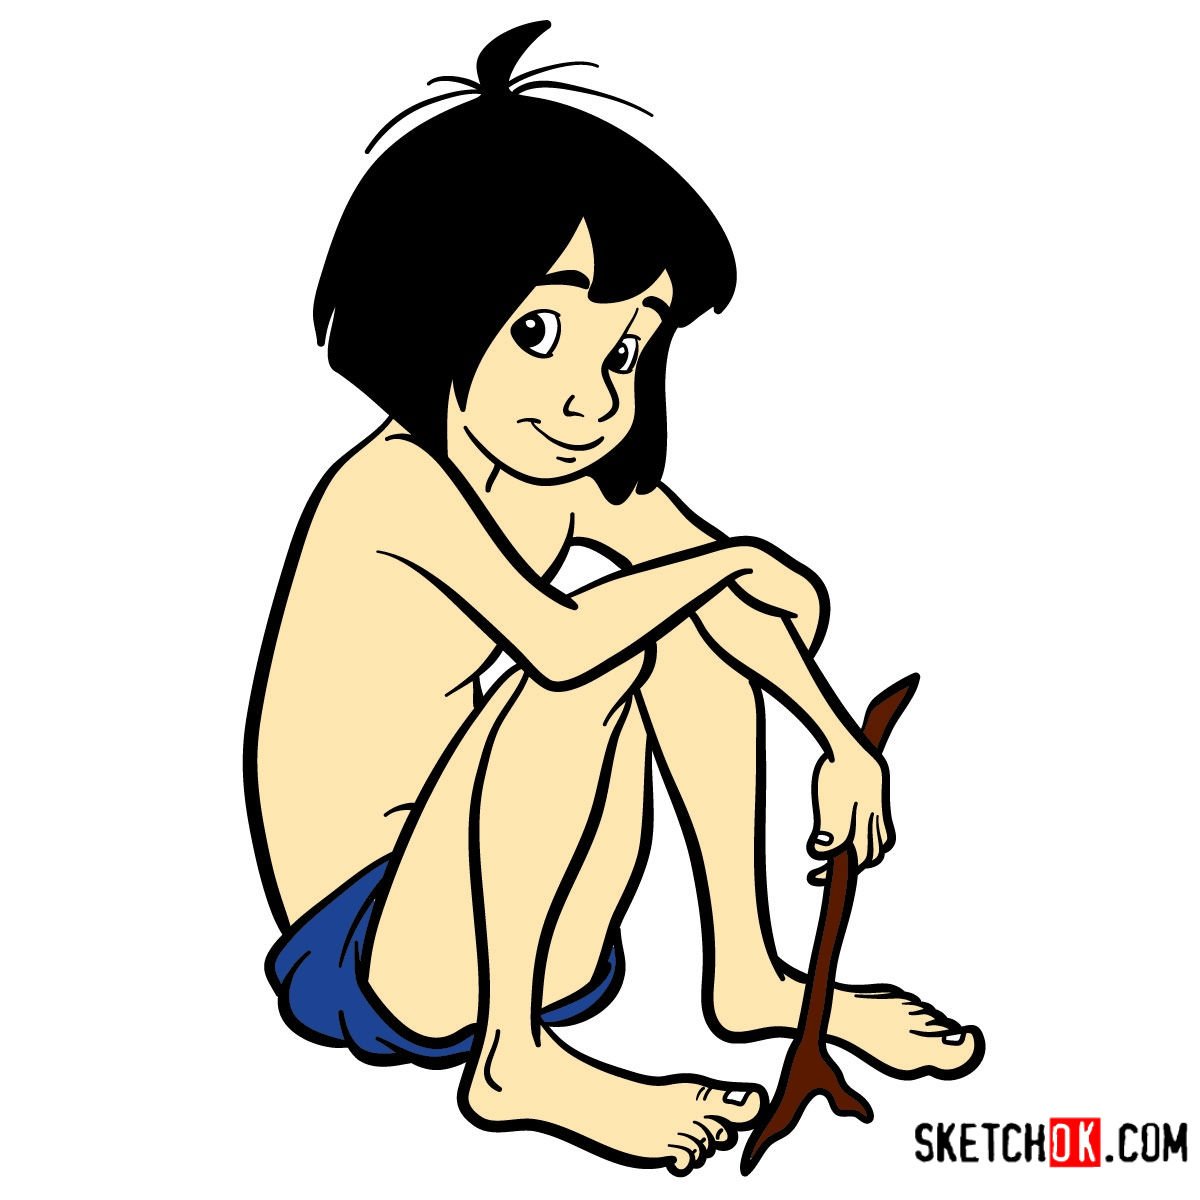 How to draw Mowgli | The Jungle Book